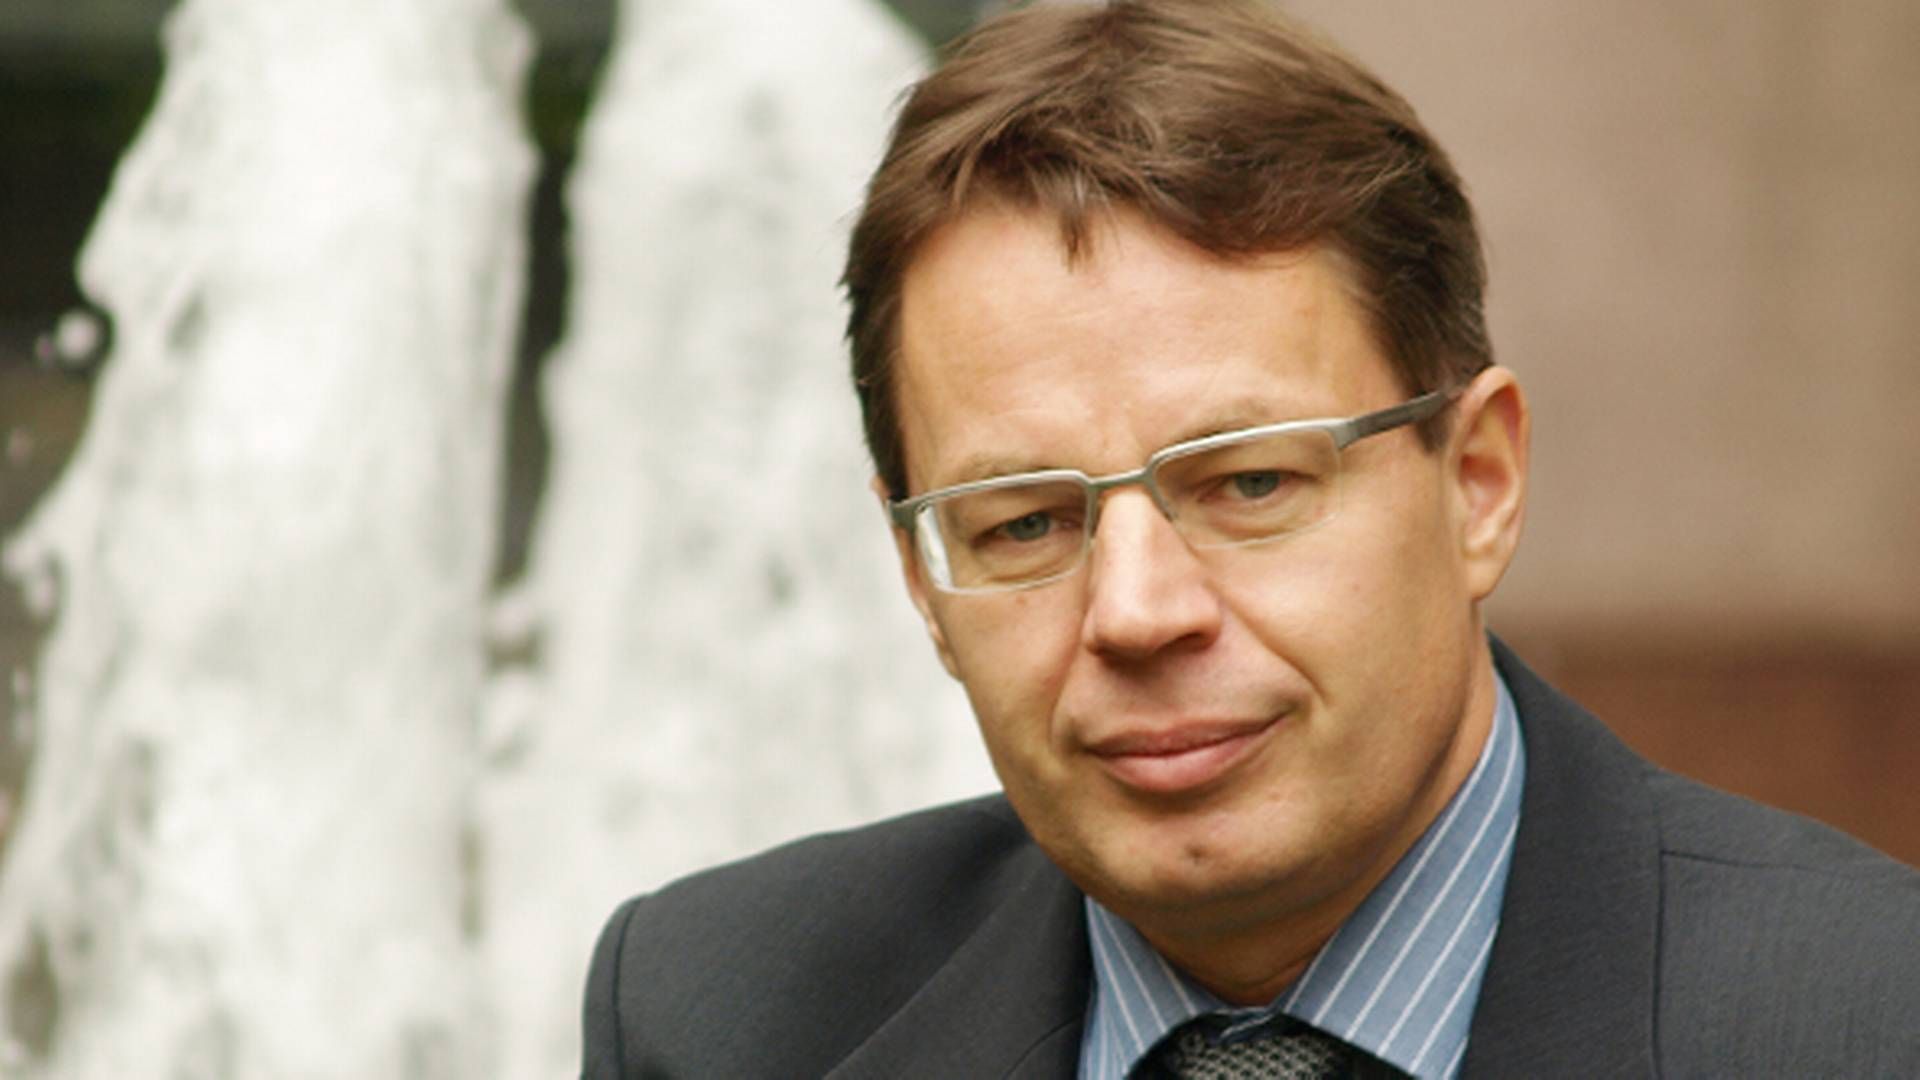 Ari Kaaro, managing director of Seligson & Co Fund Management in Finland. | Photo: PR